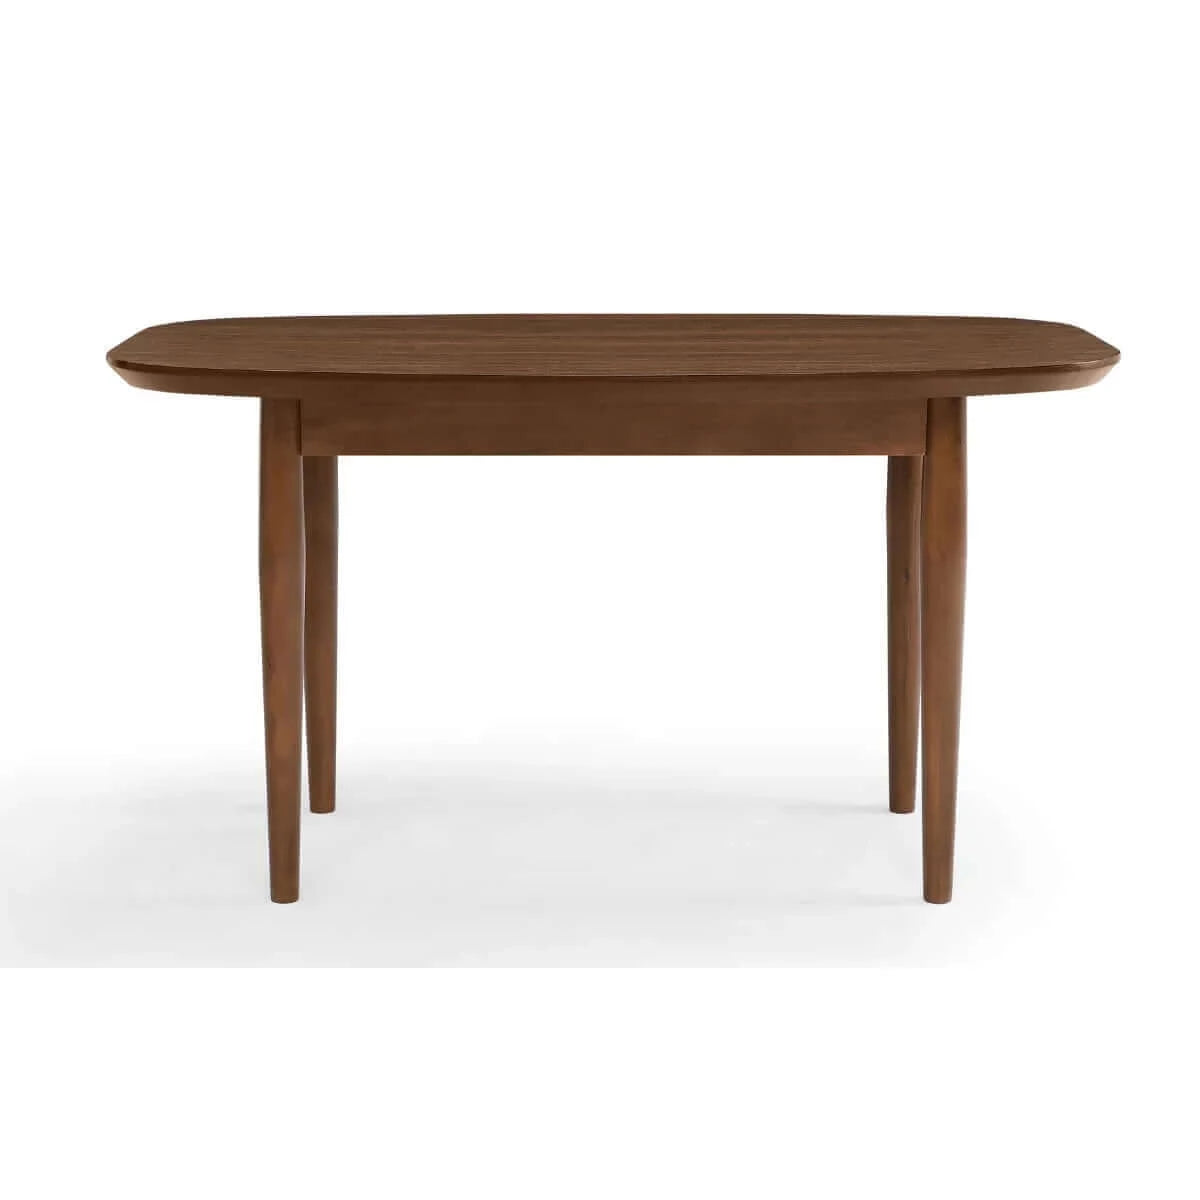 Buy pierre walnut 140cm dining table - upinteriors-Upinteriors